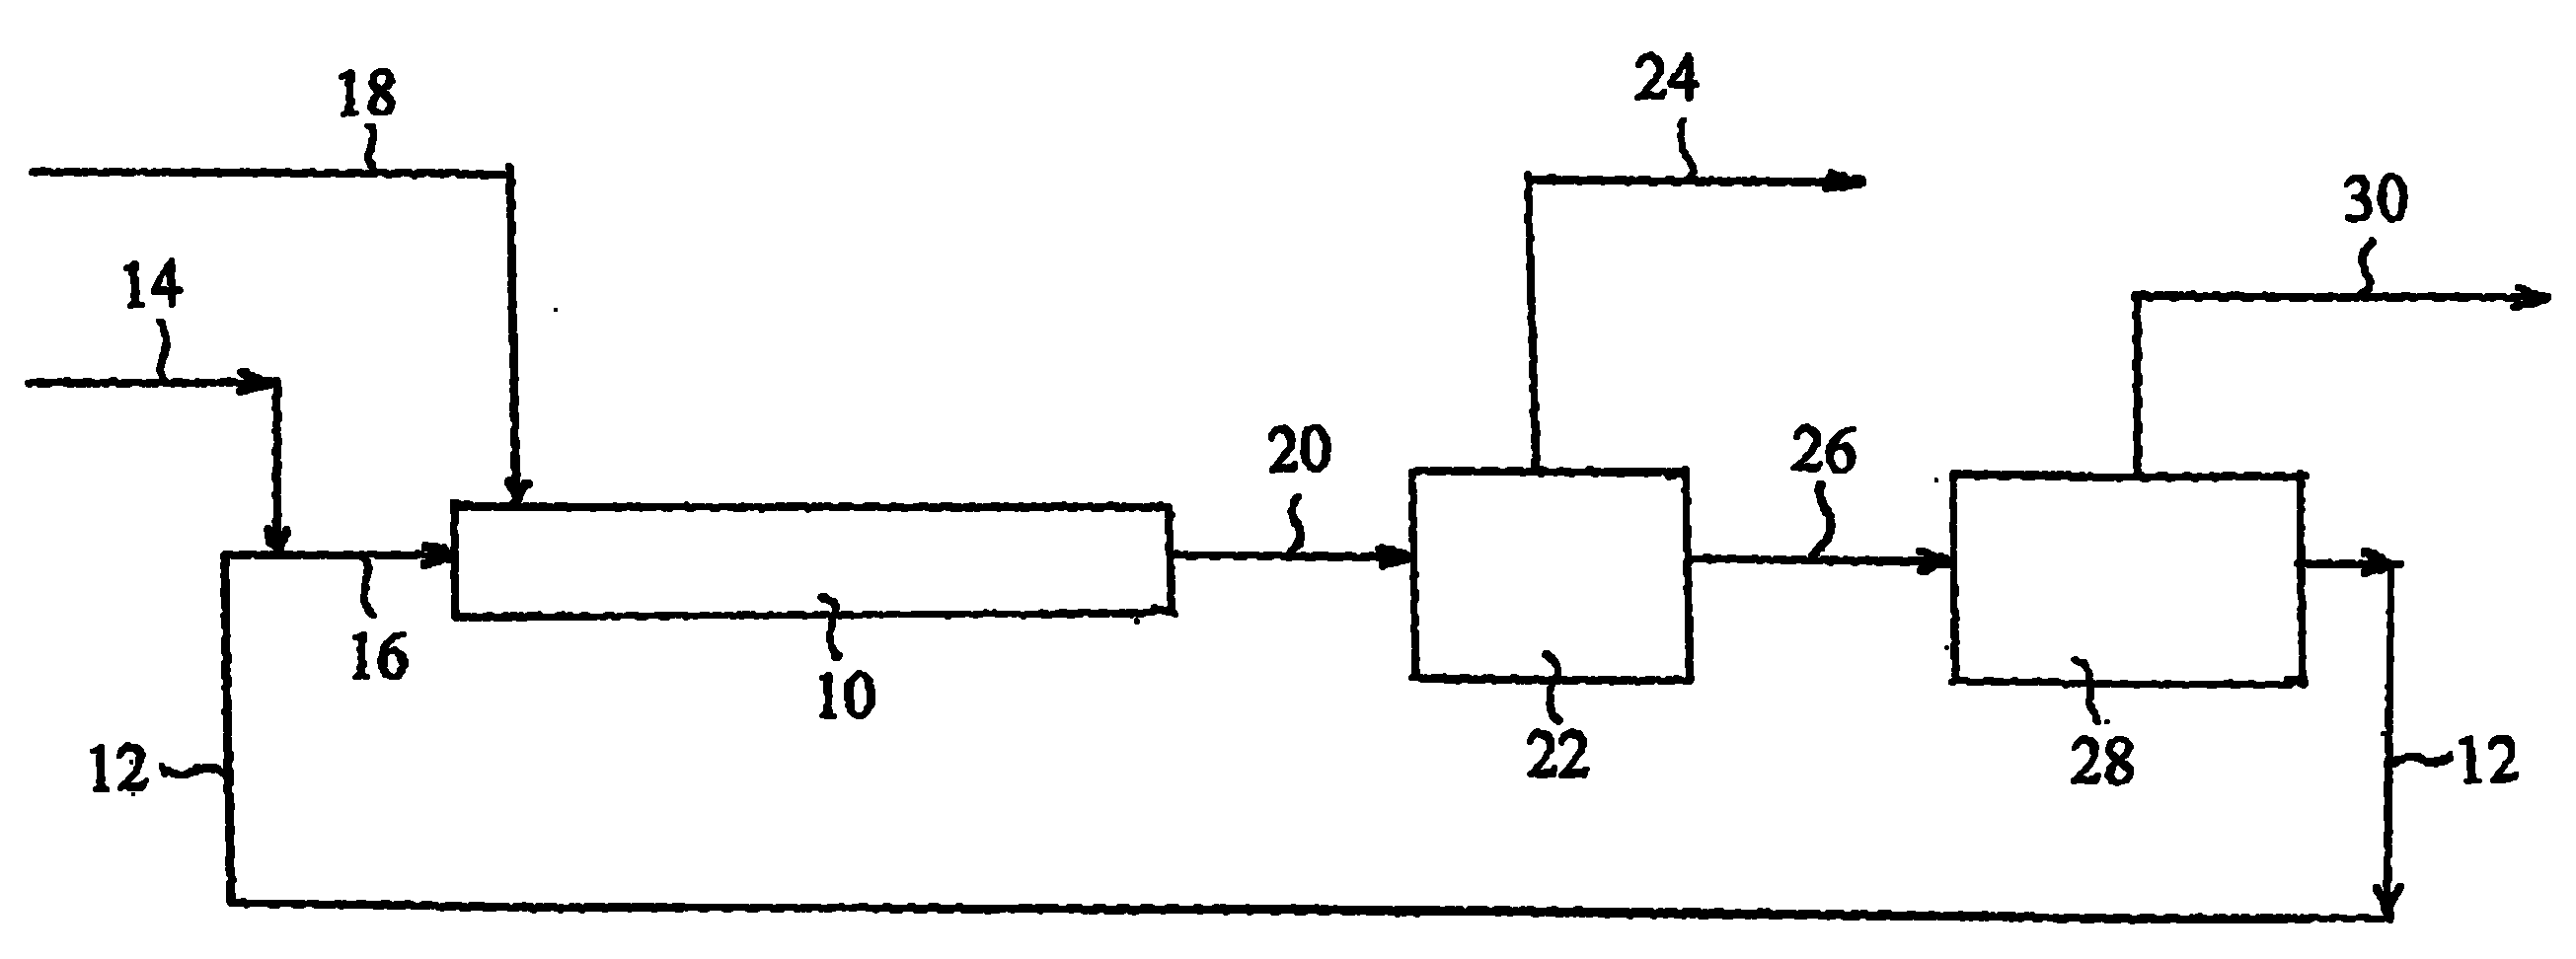 Adiabatic process for making mononitrobenzene